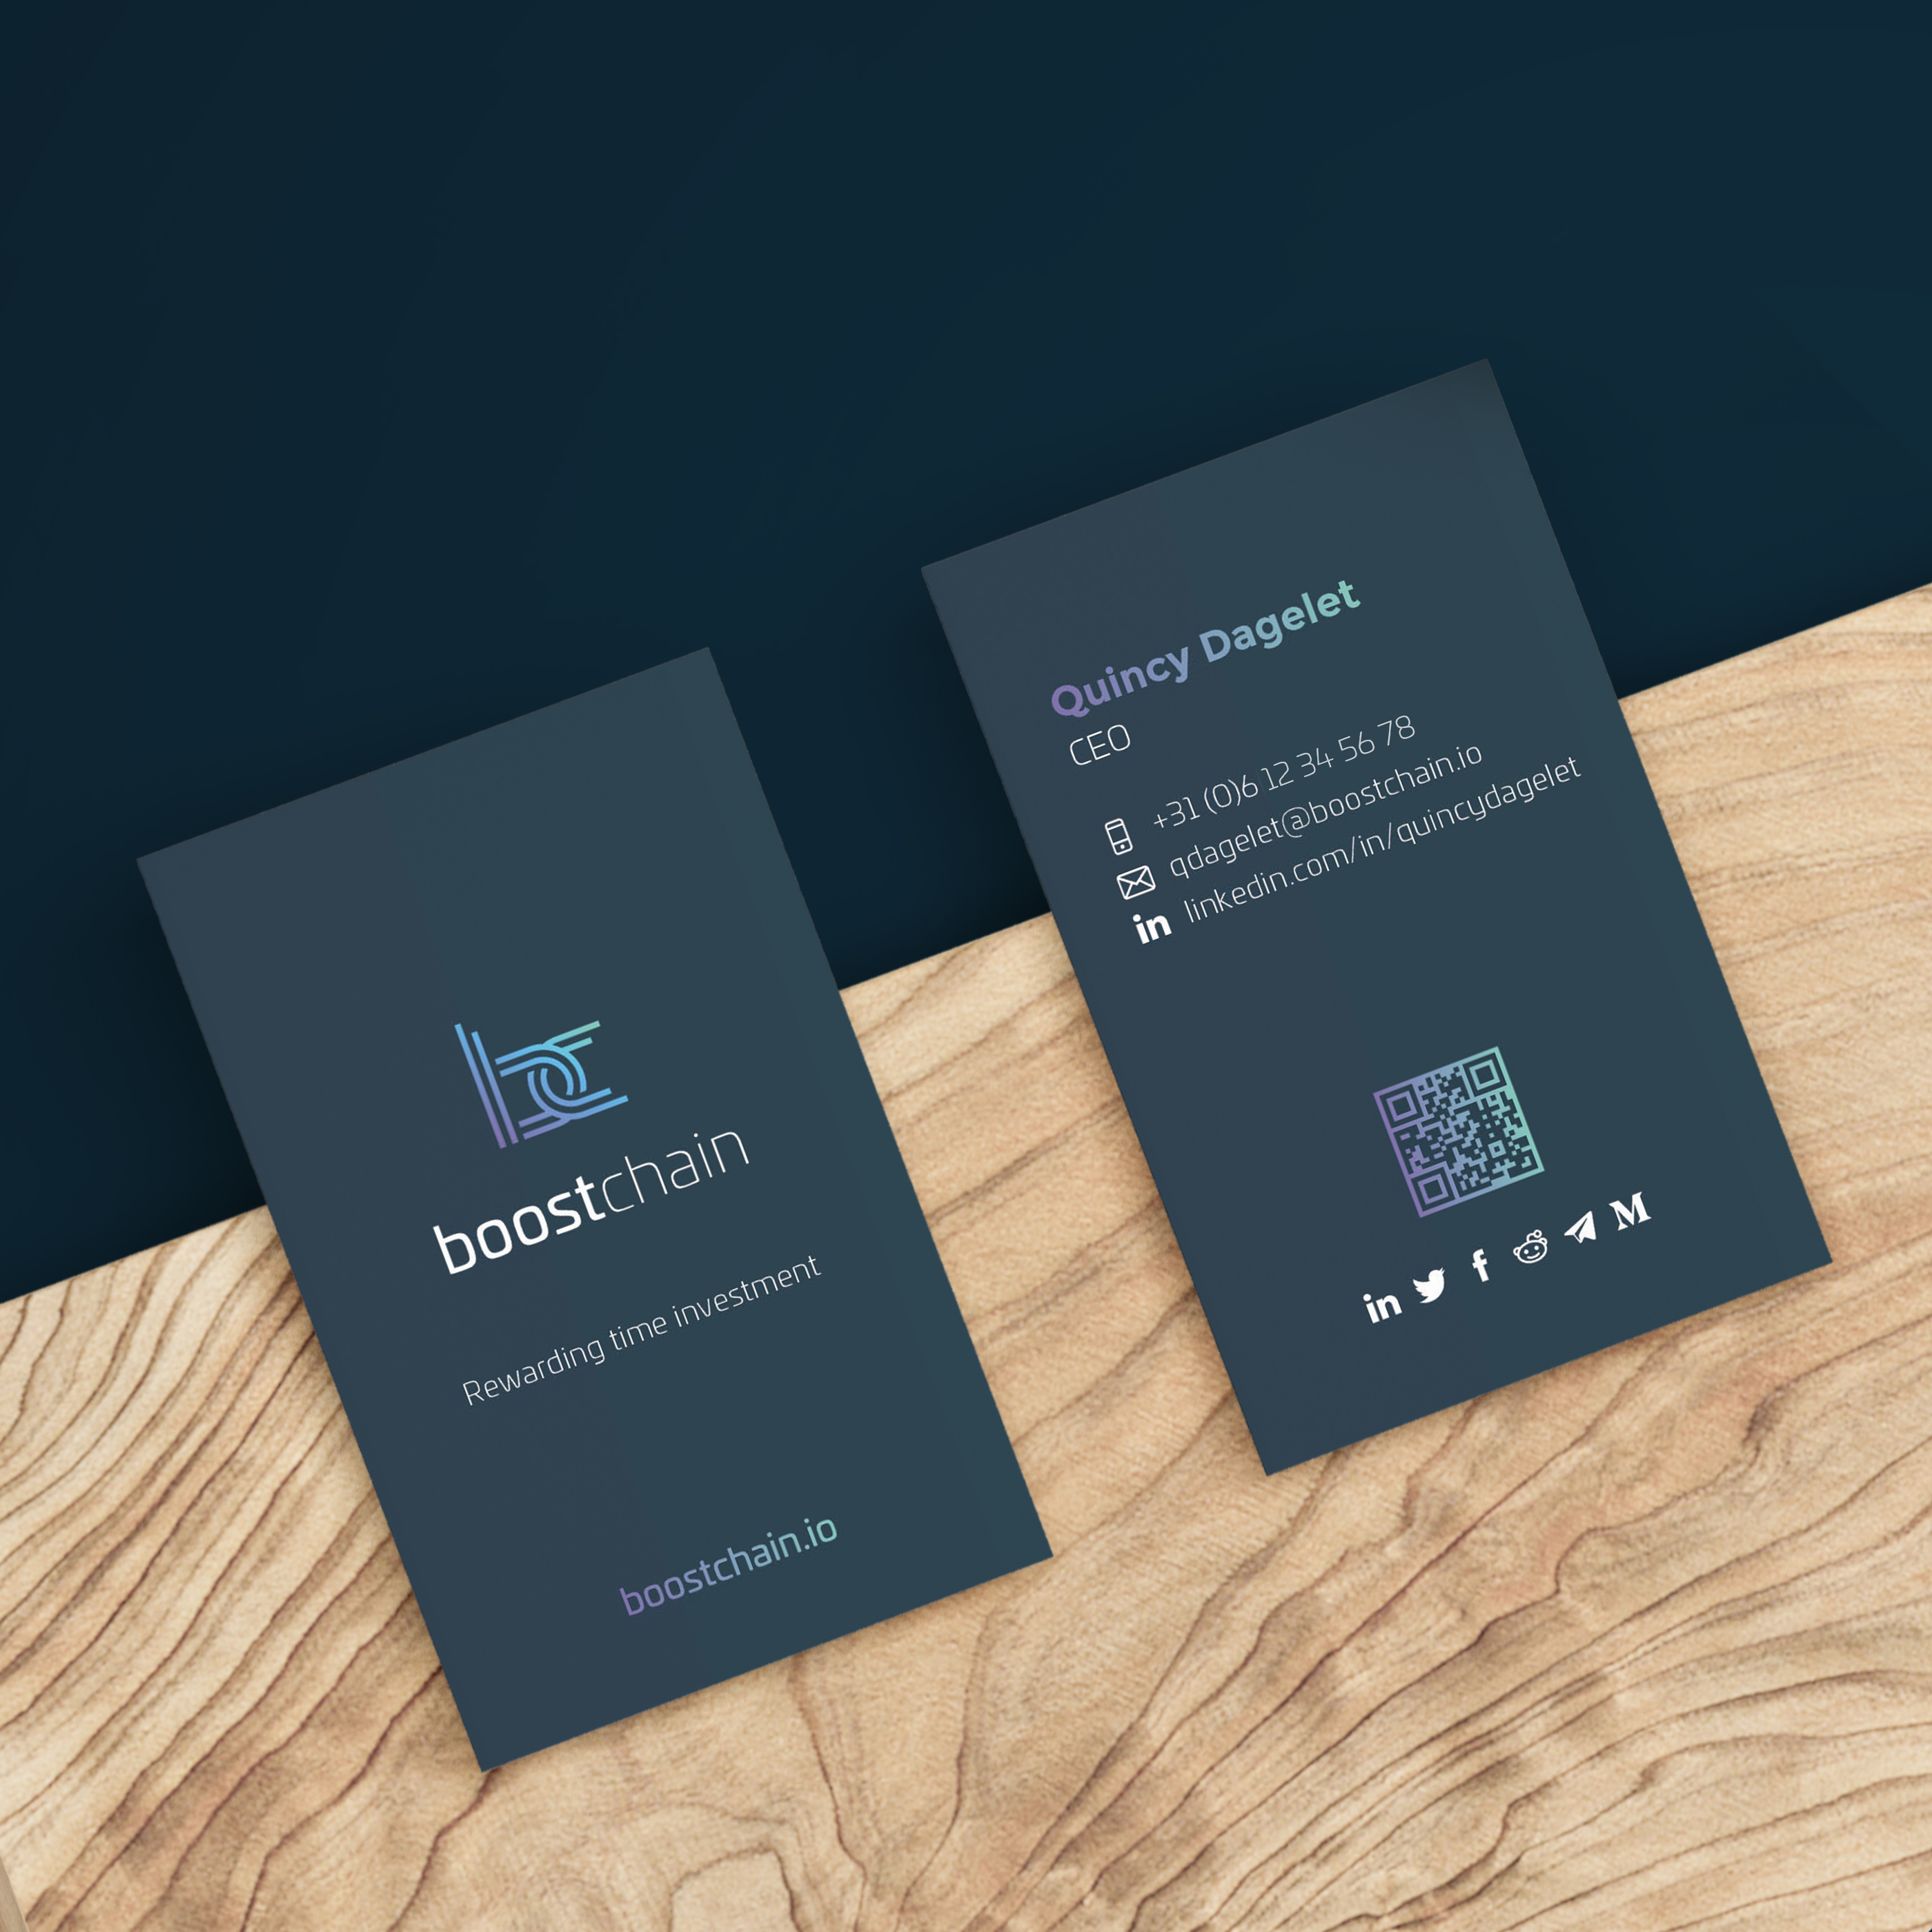 Boostchain businesscard design